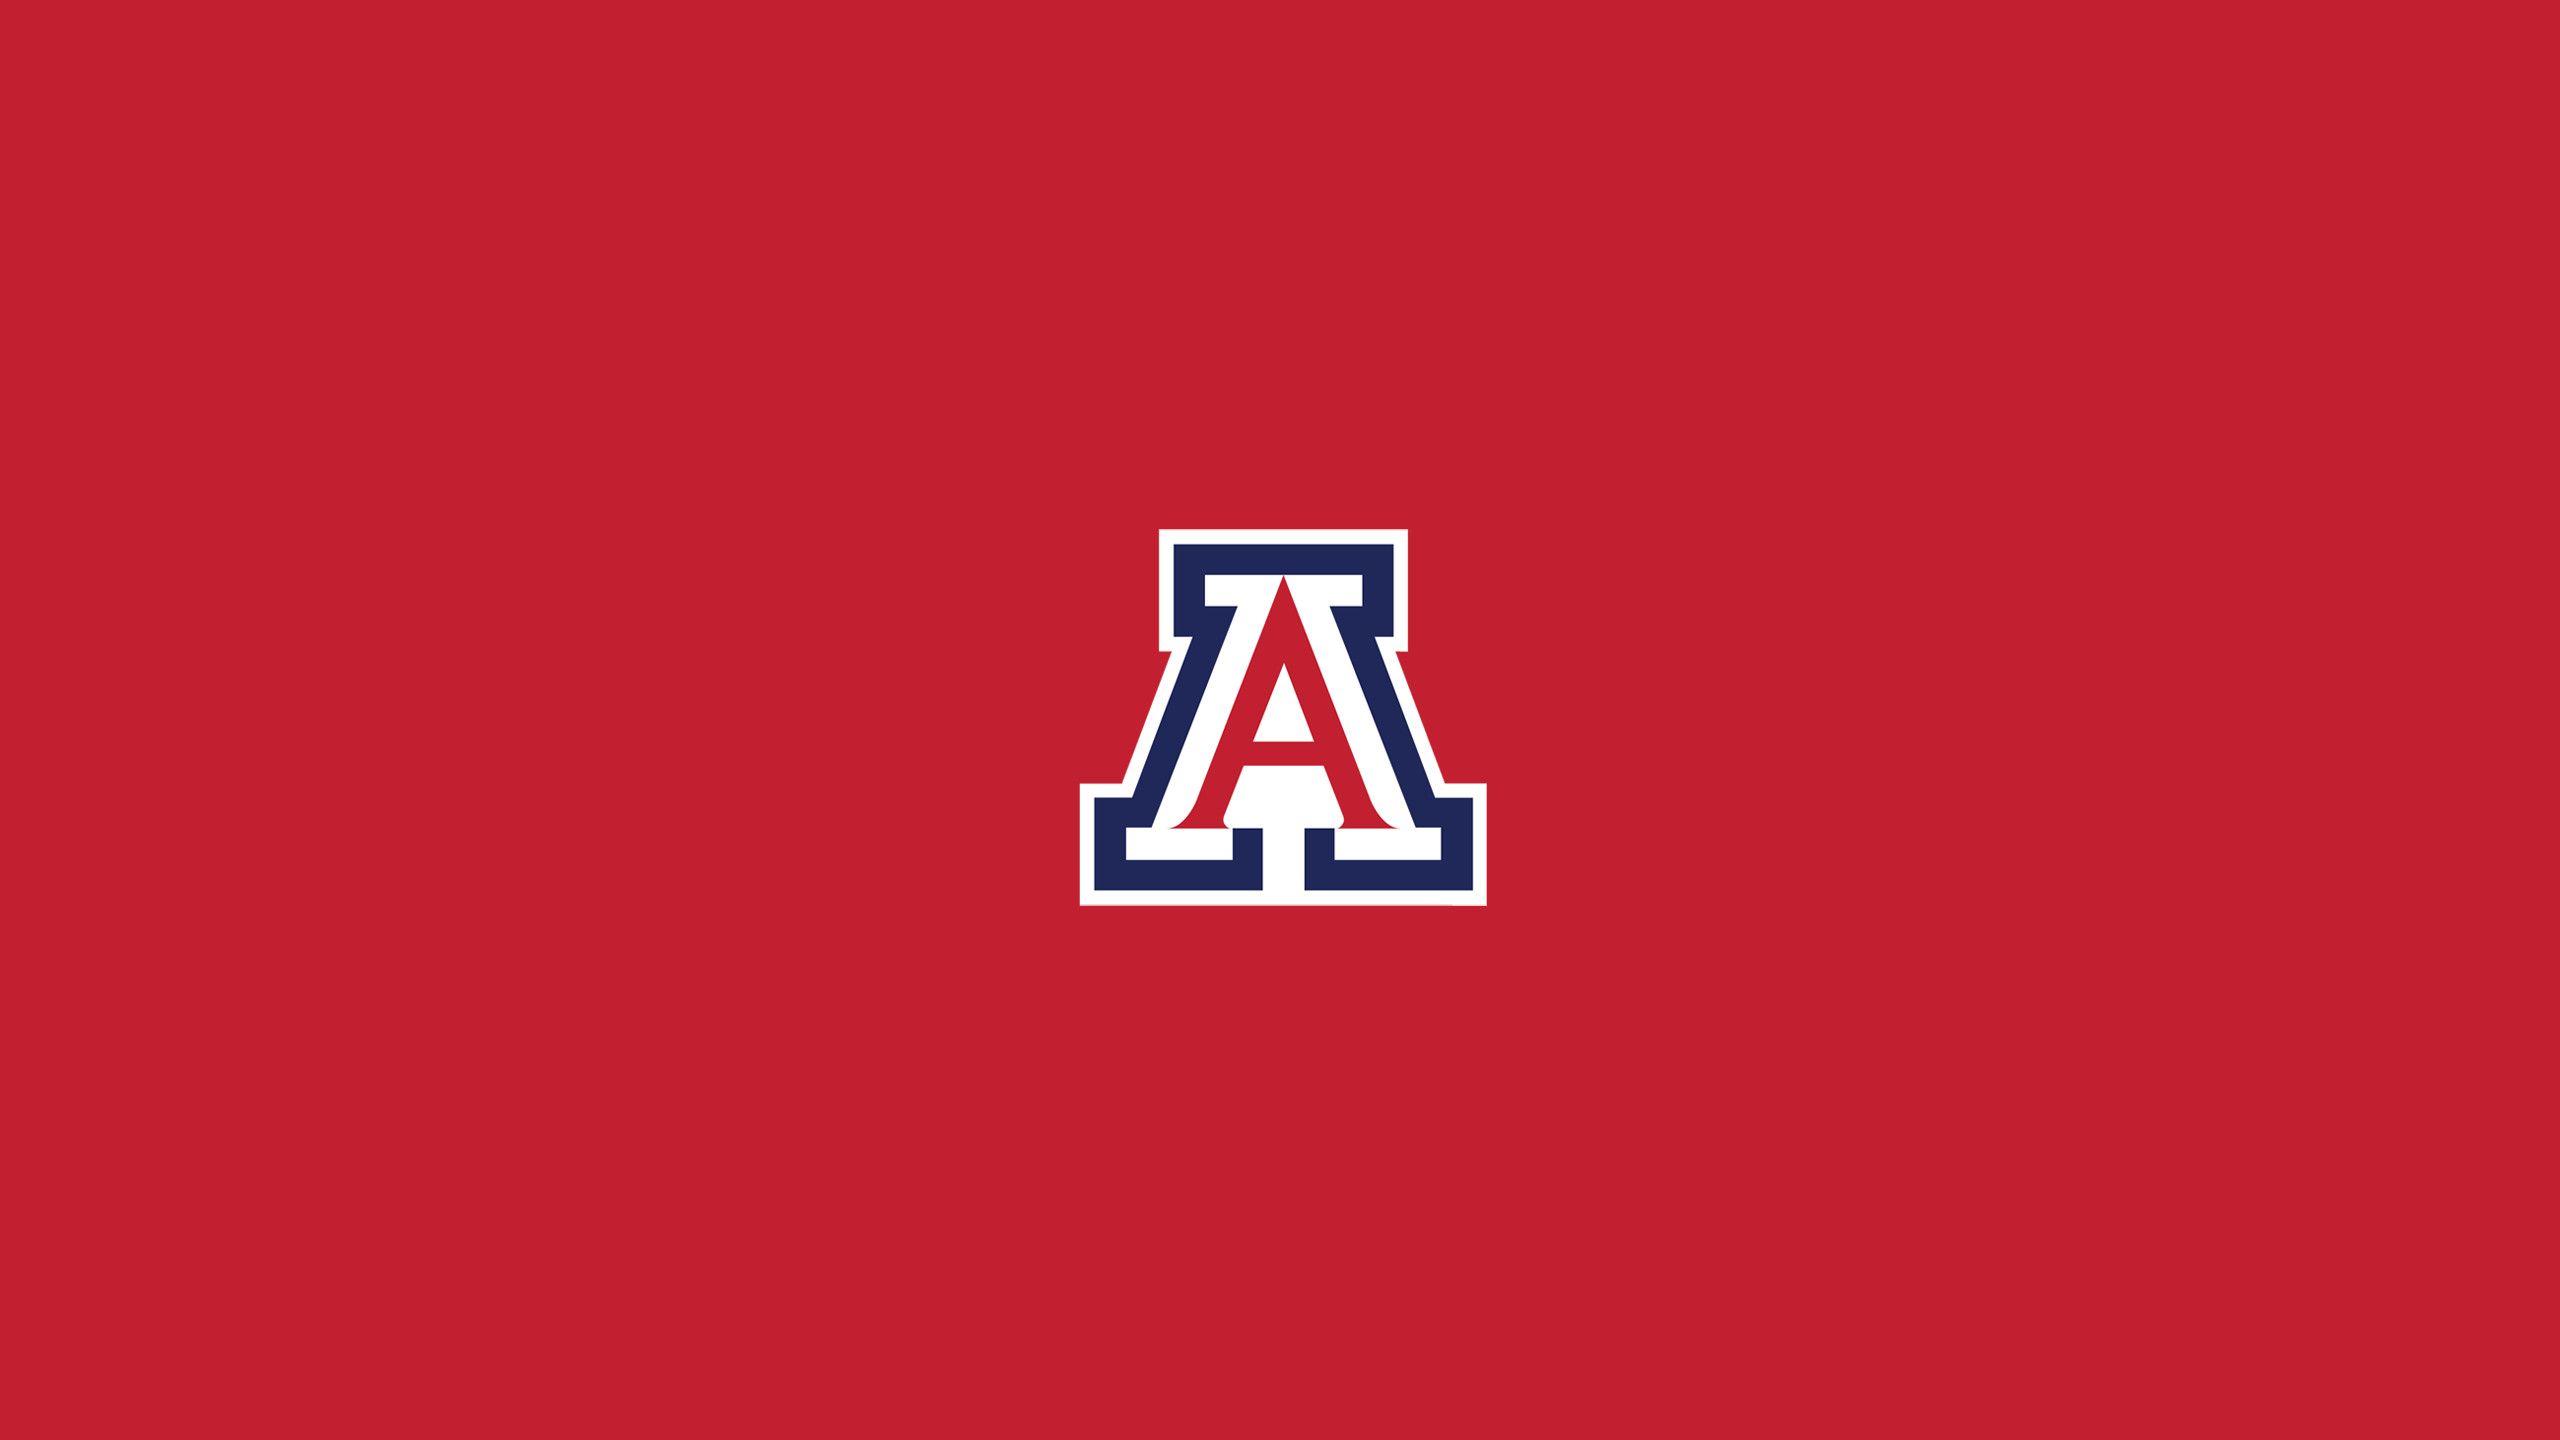 University of Arizona Wildcats Logo - University of Arizona Wildcats Logo Wallpaper Background 62471 ...